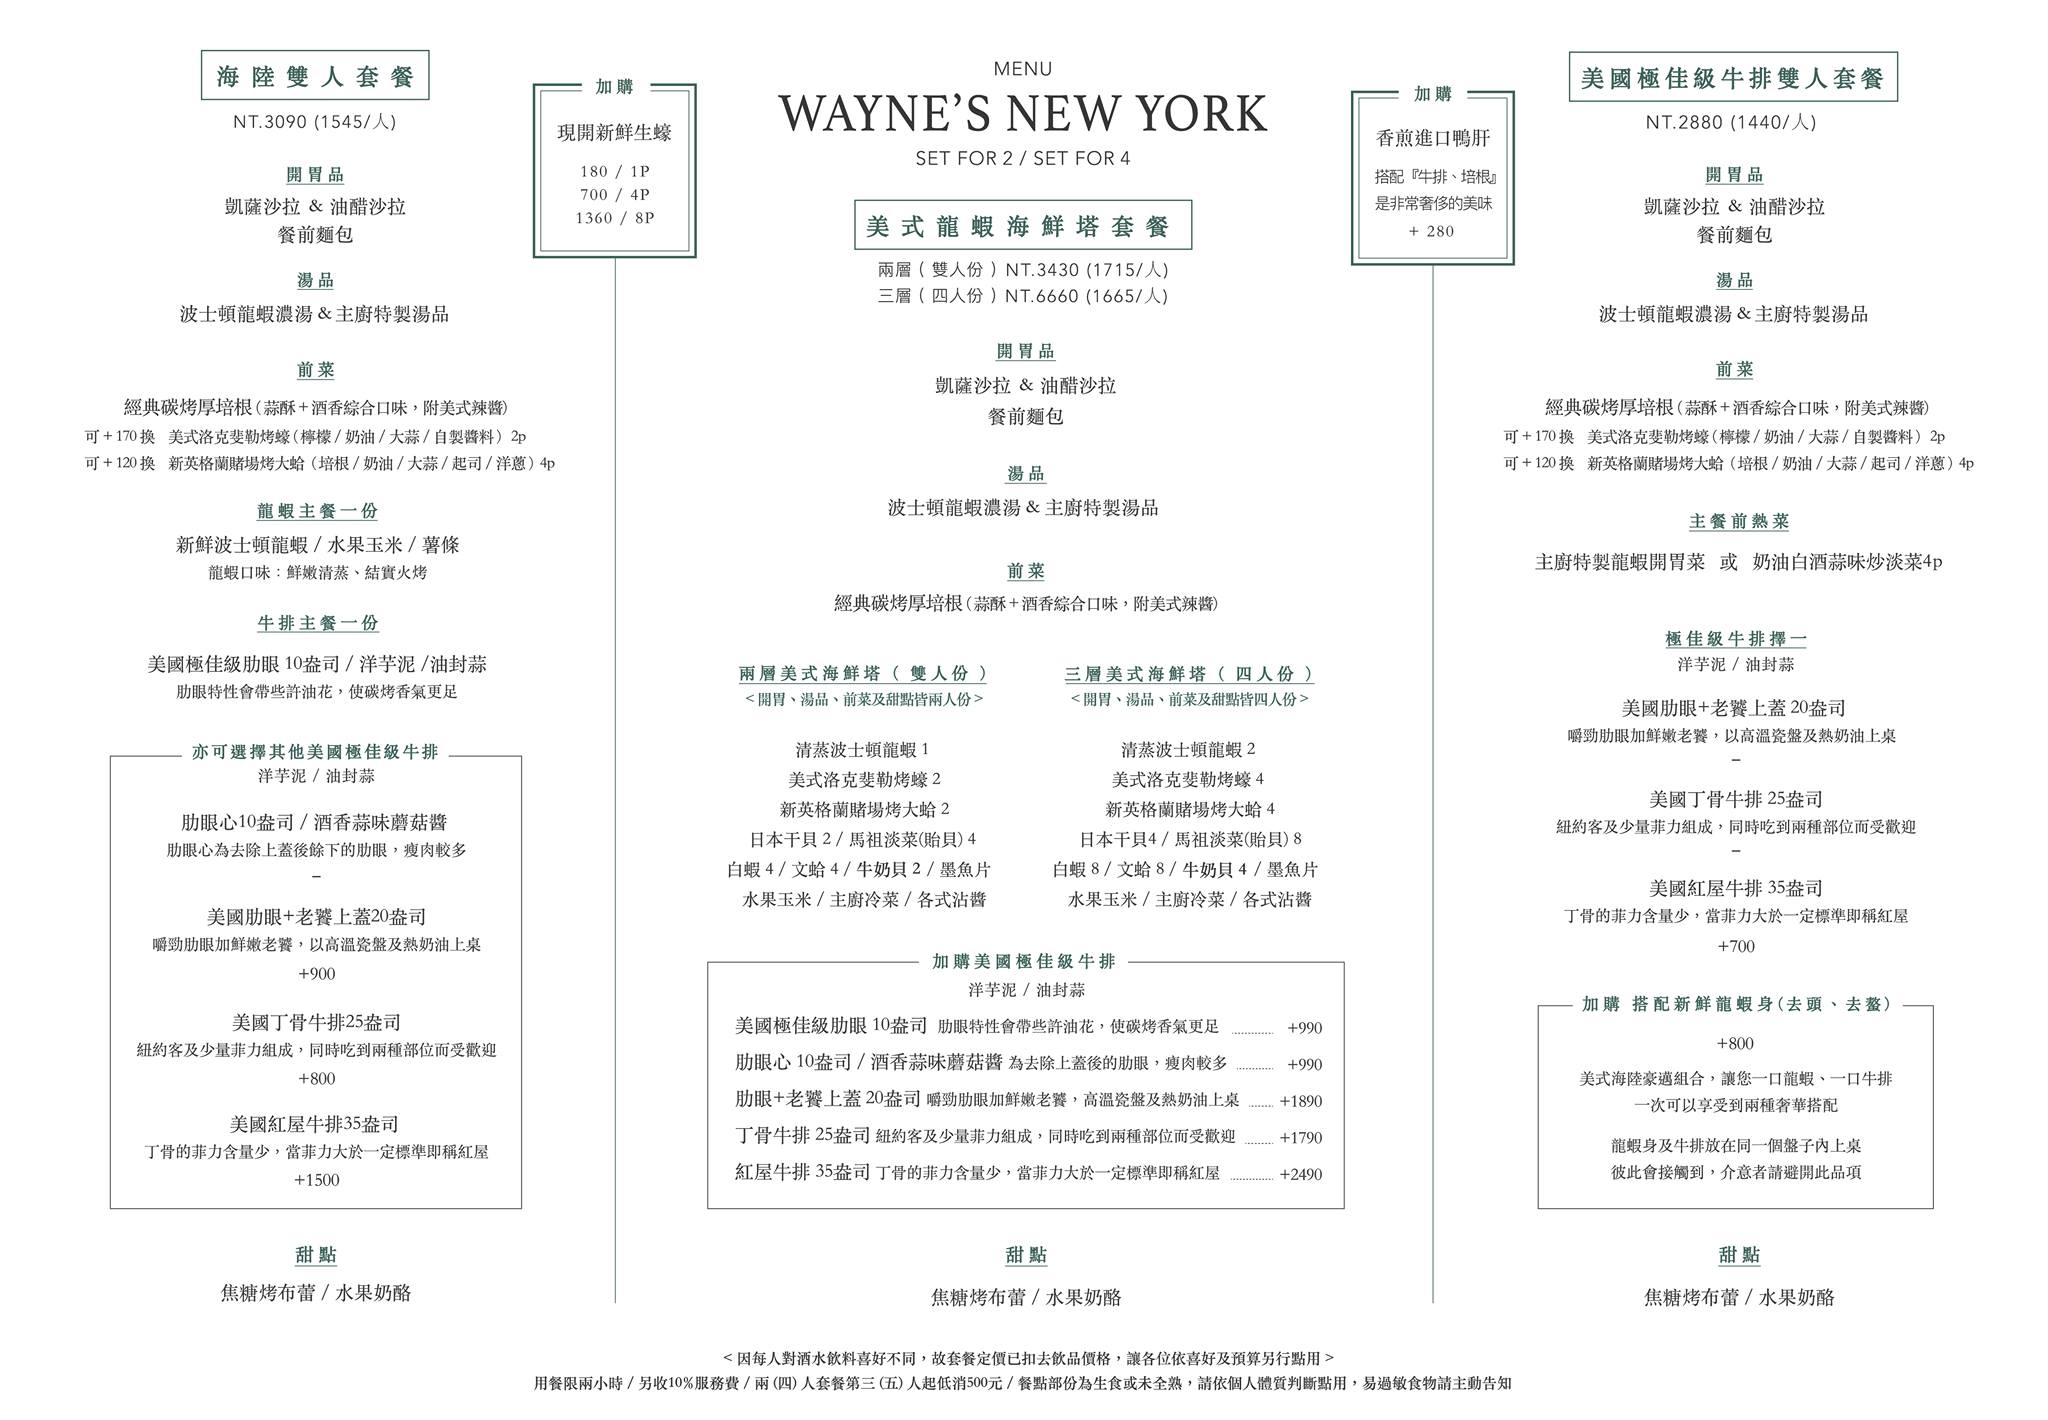 Wayne's New York 菜单